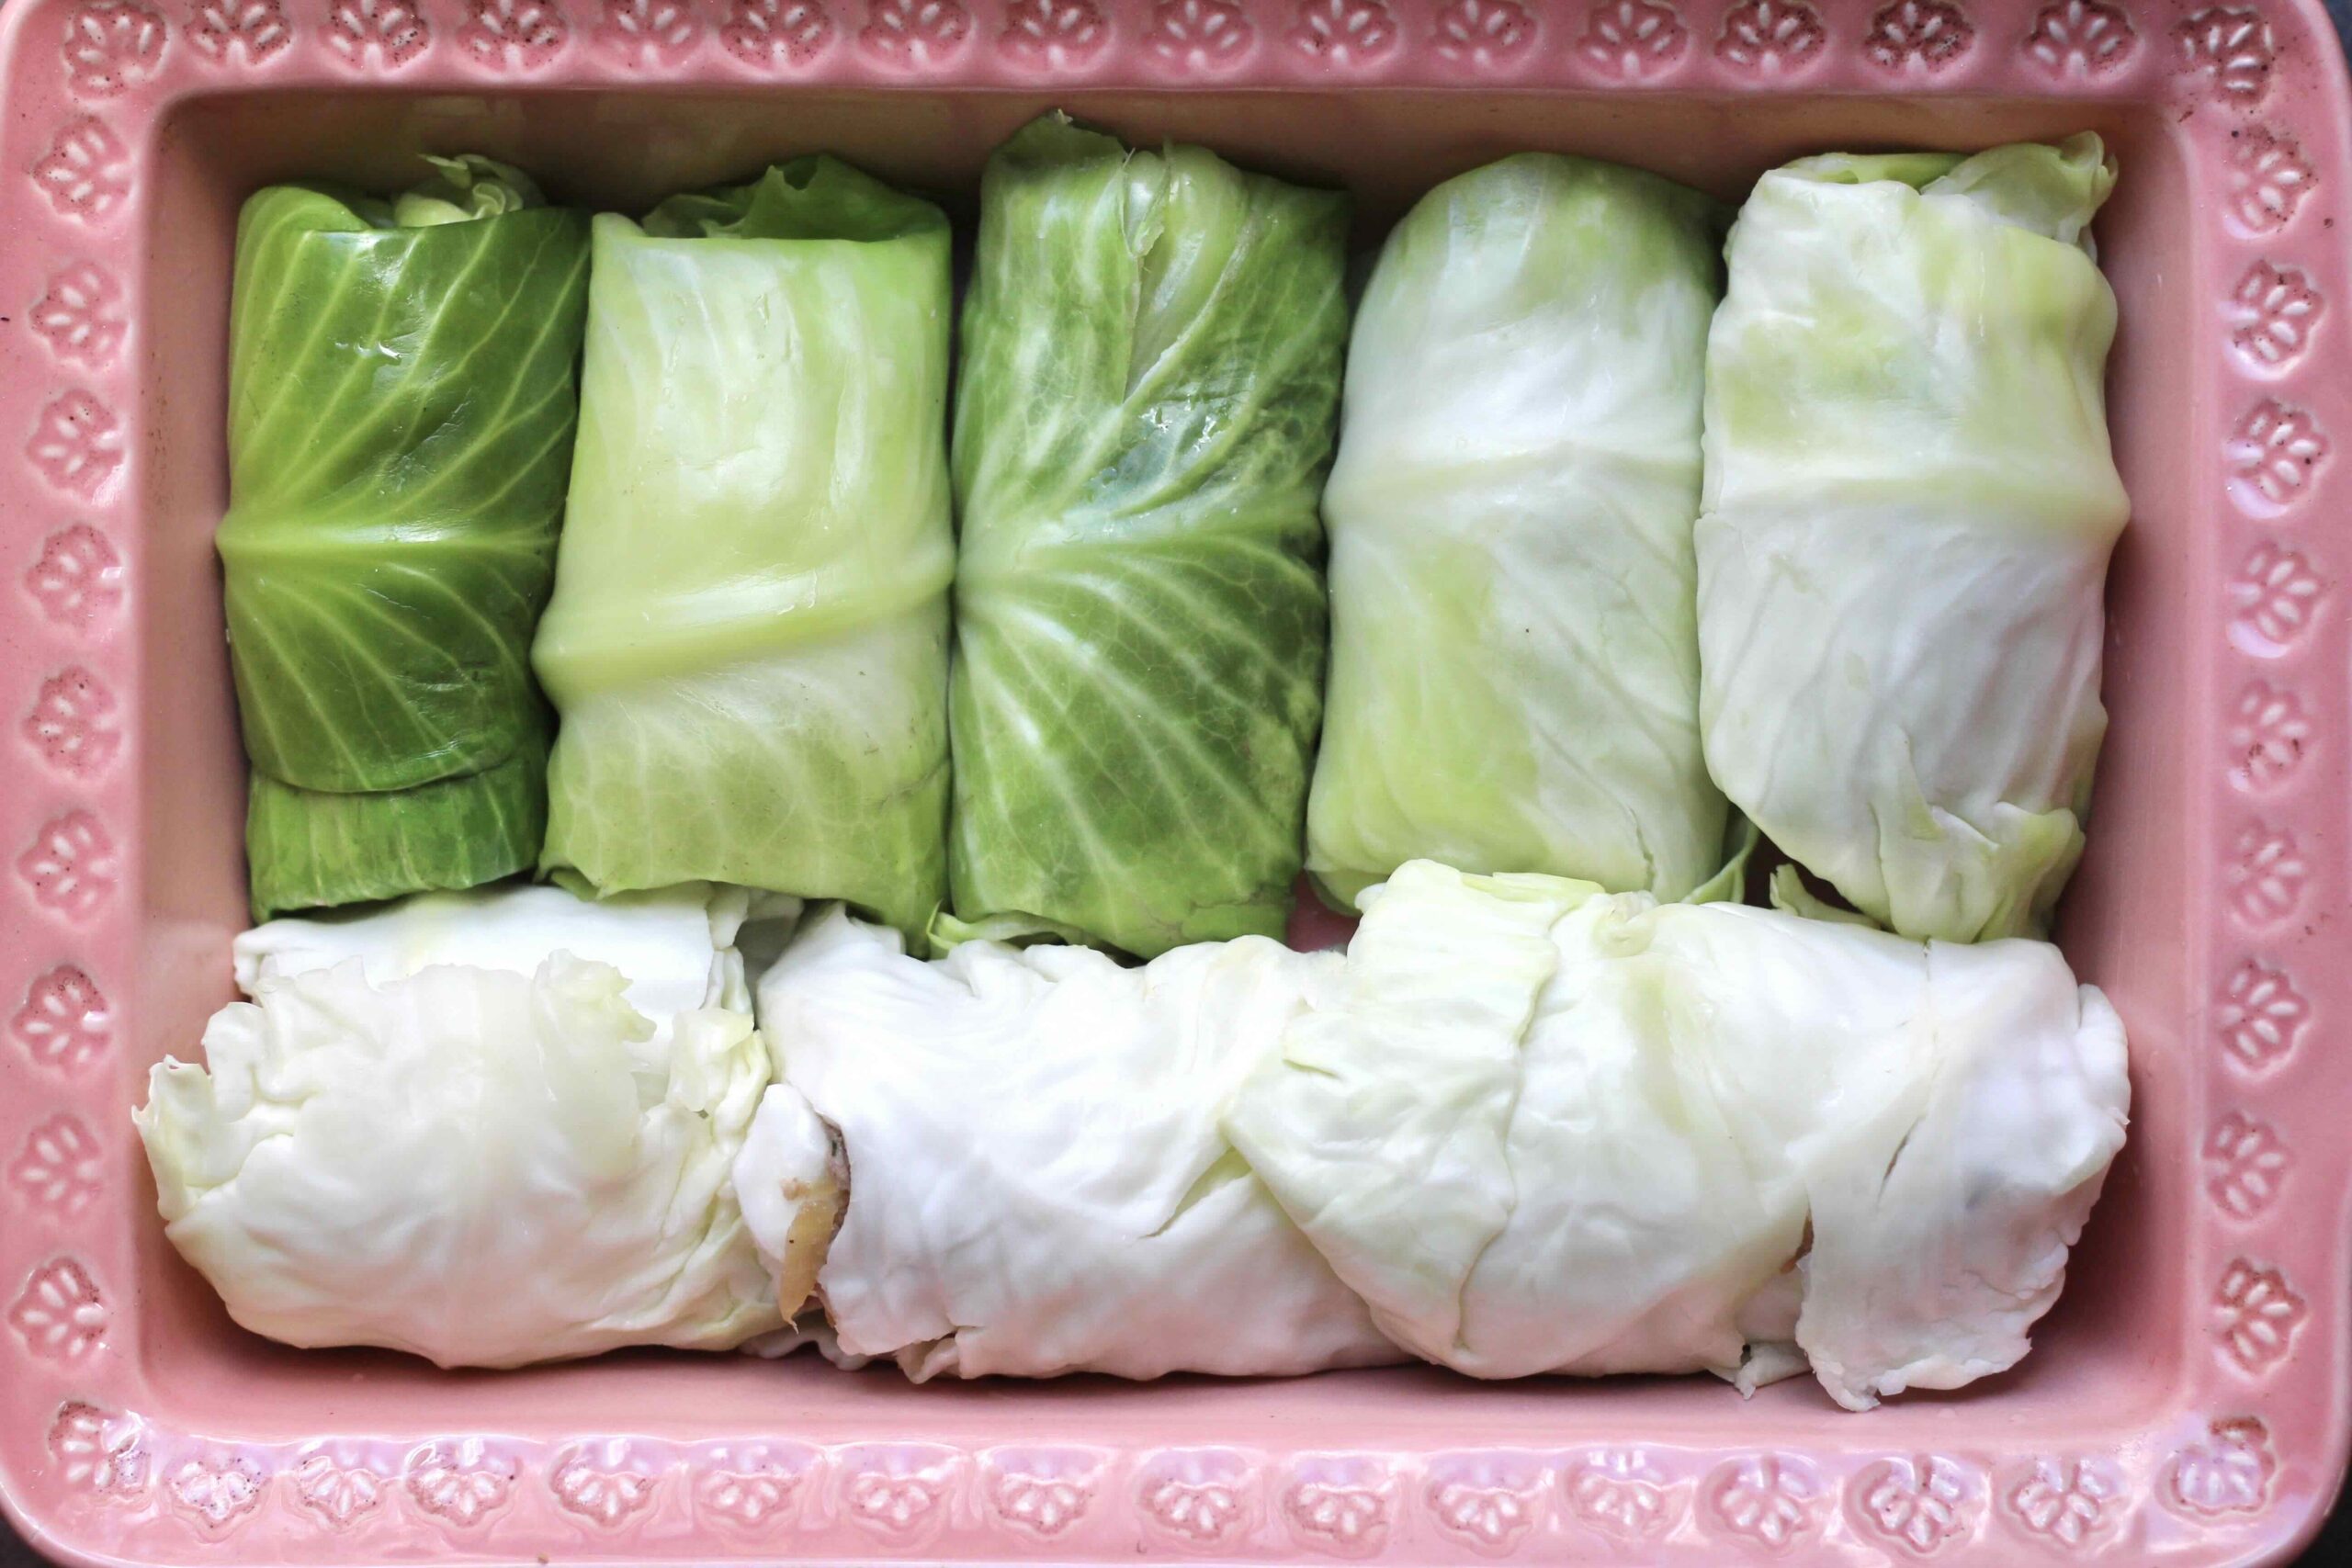 Cabbage rolls